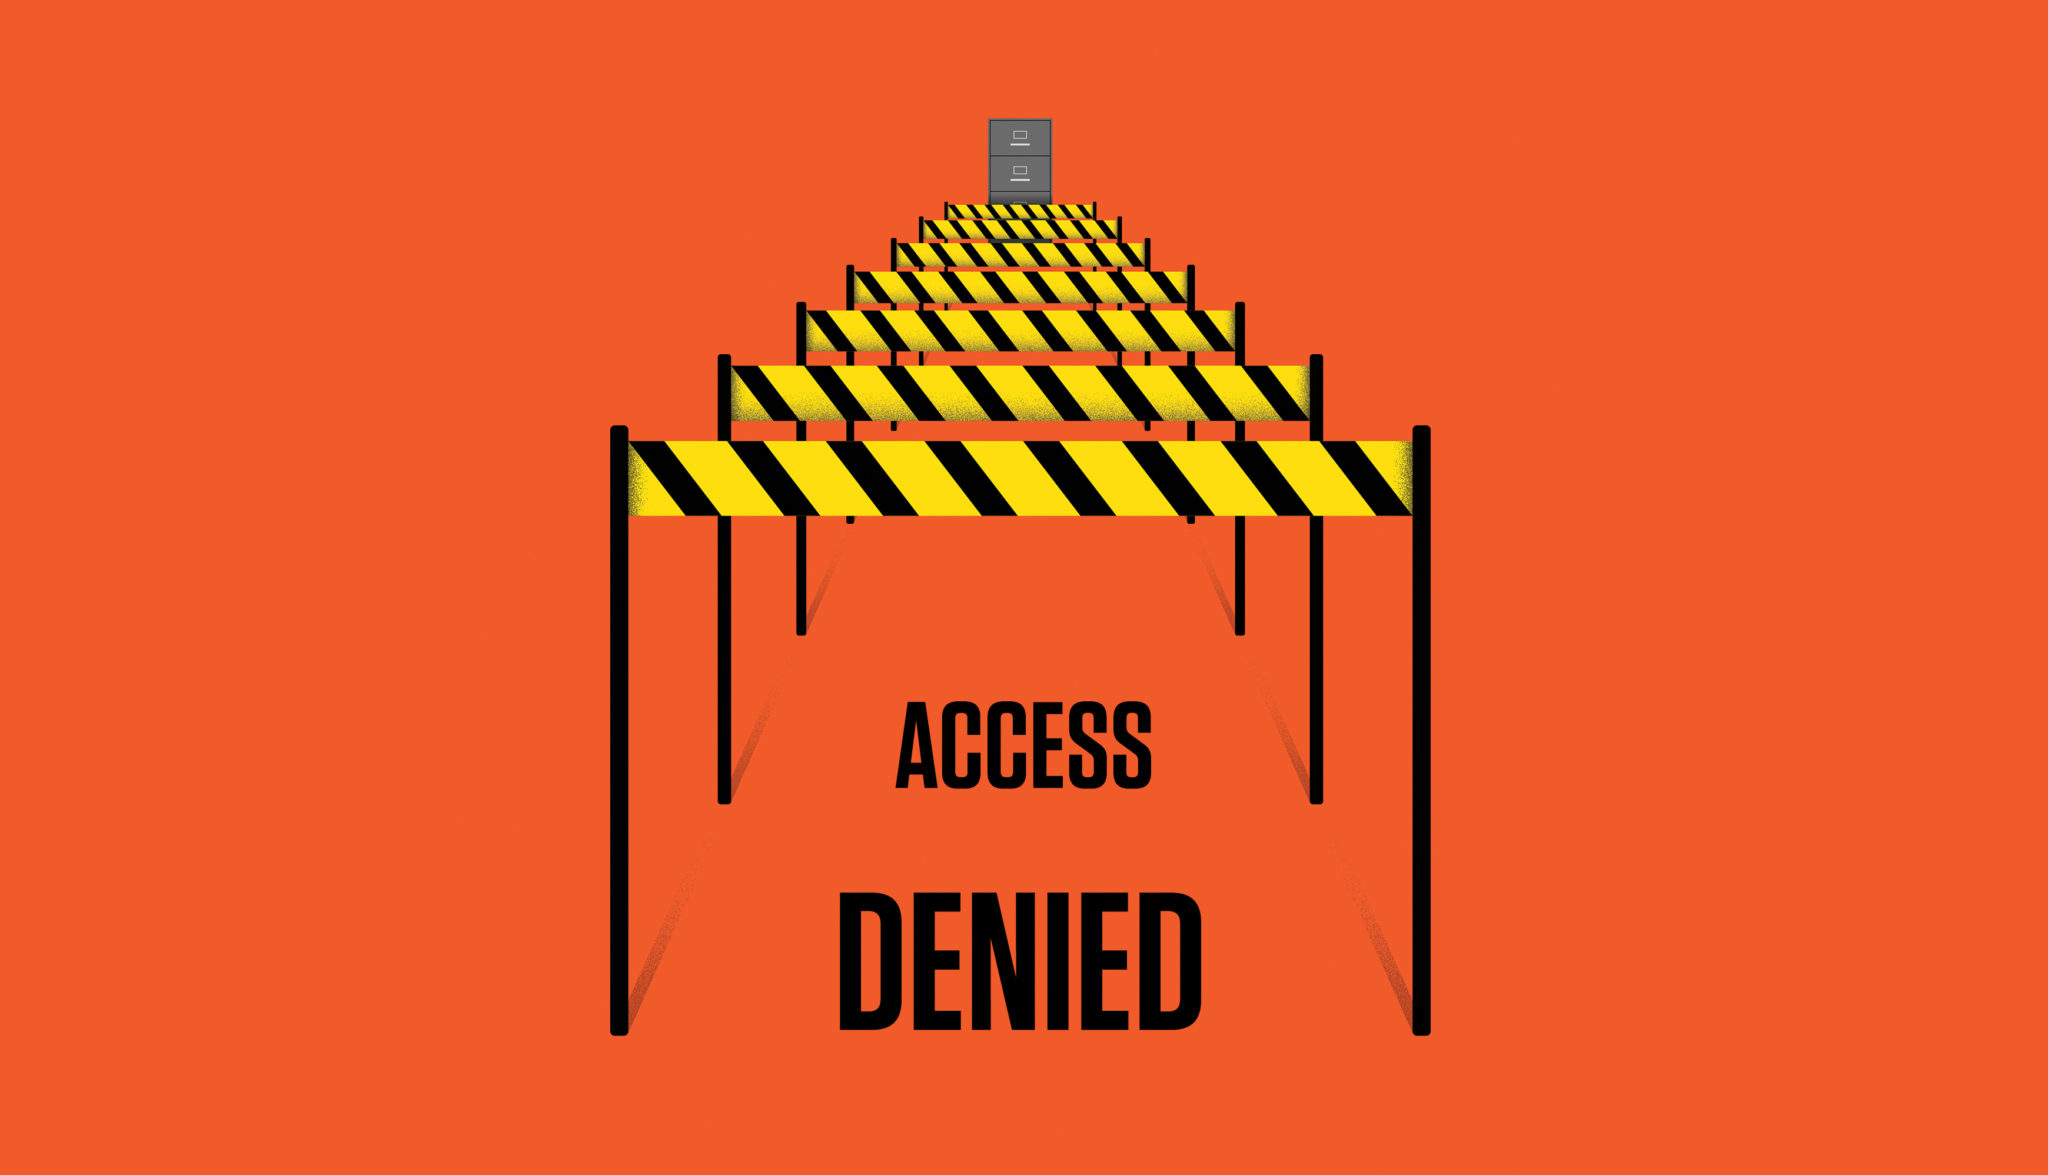 Git access denied. Access denied. Access denied картинки. Access denied Wallpaper. Access denied gif.